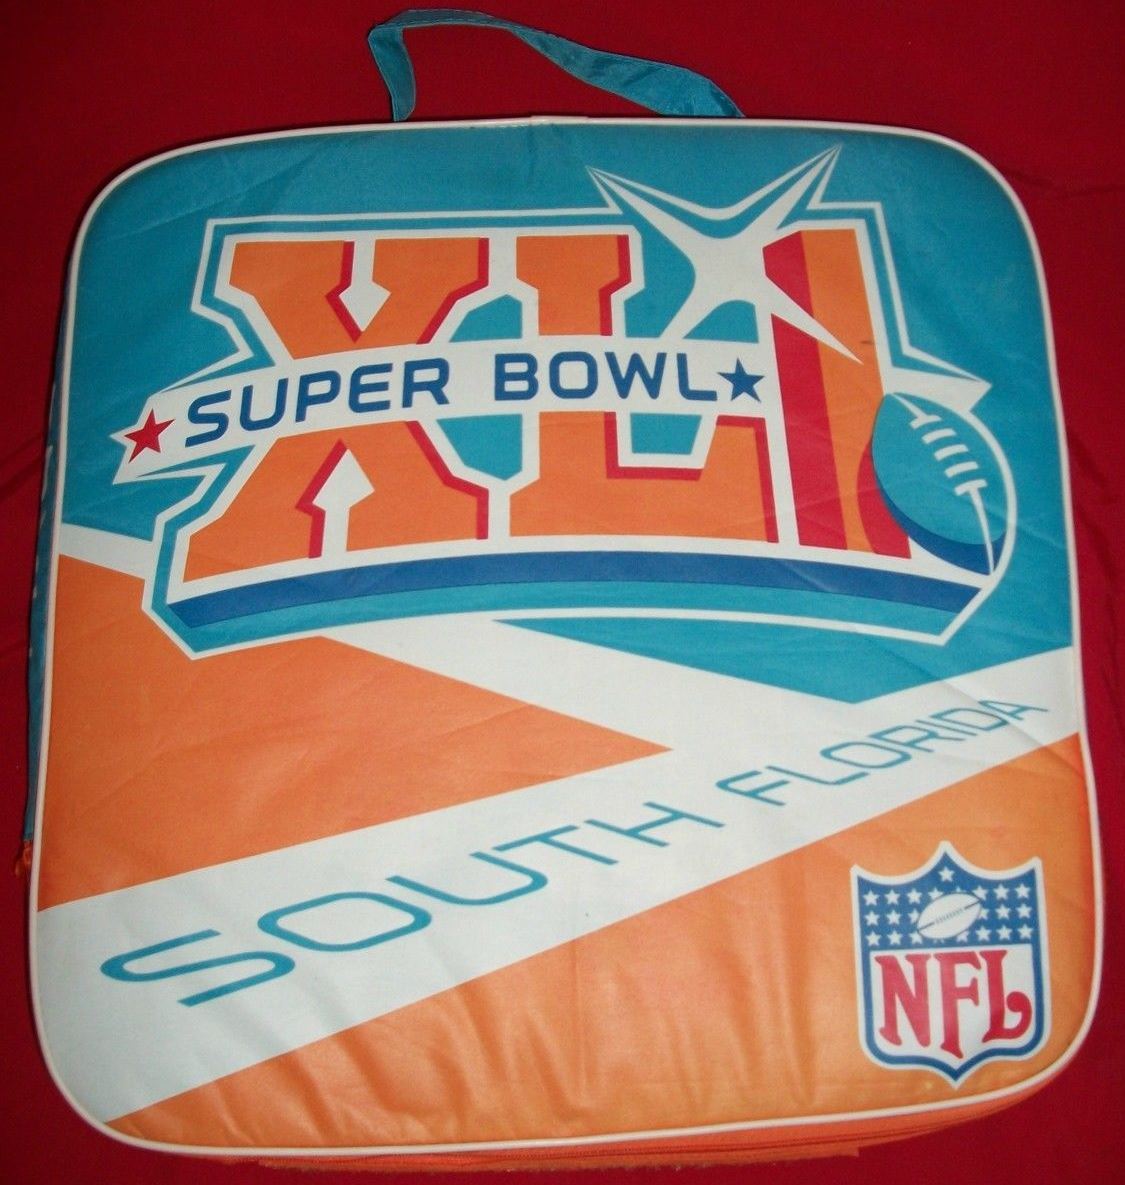 Super Bowl XLI        Cushion